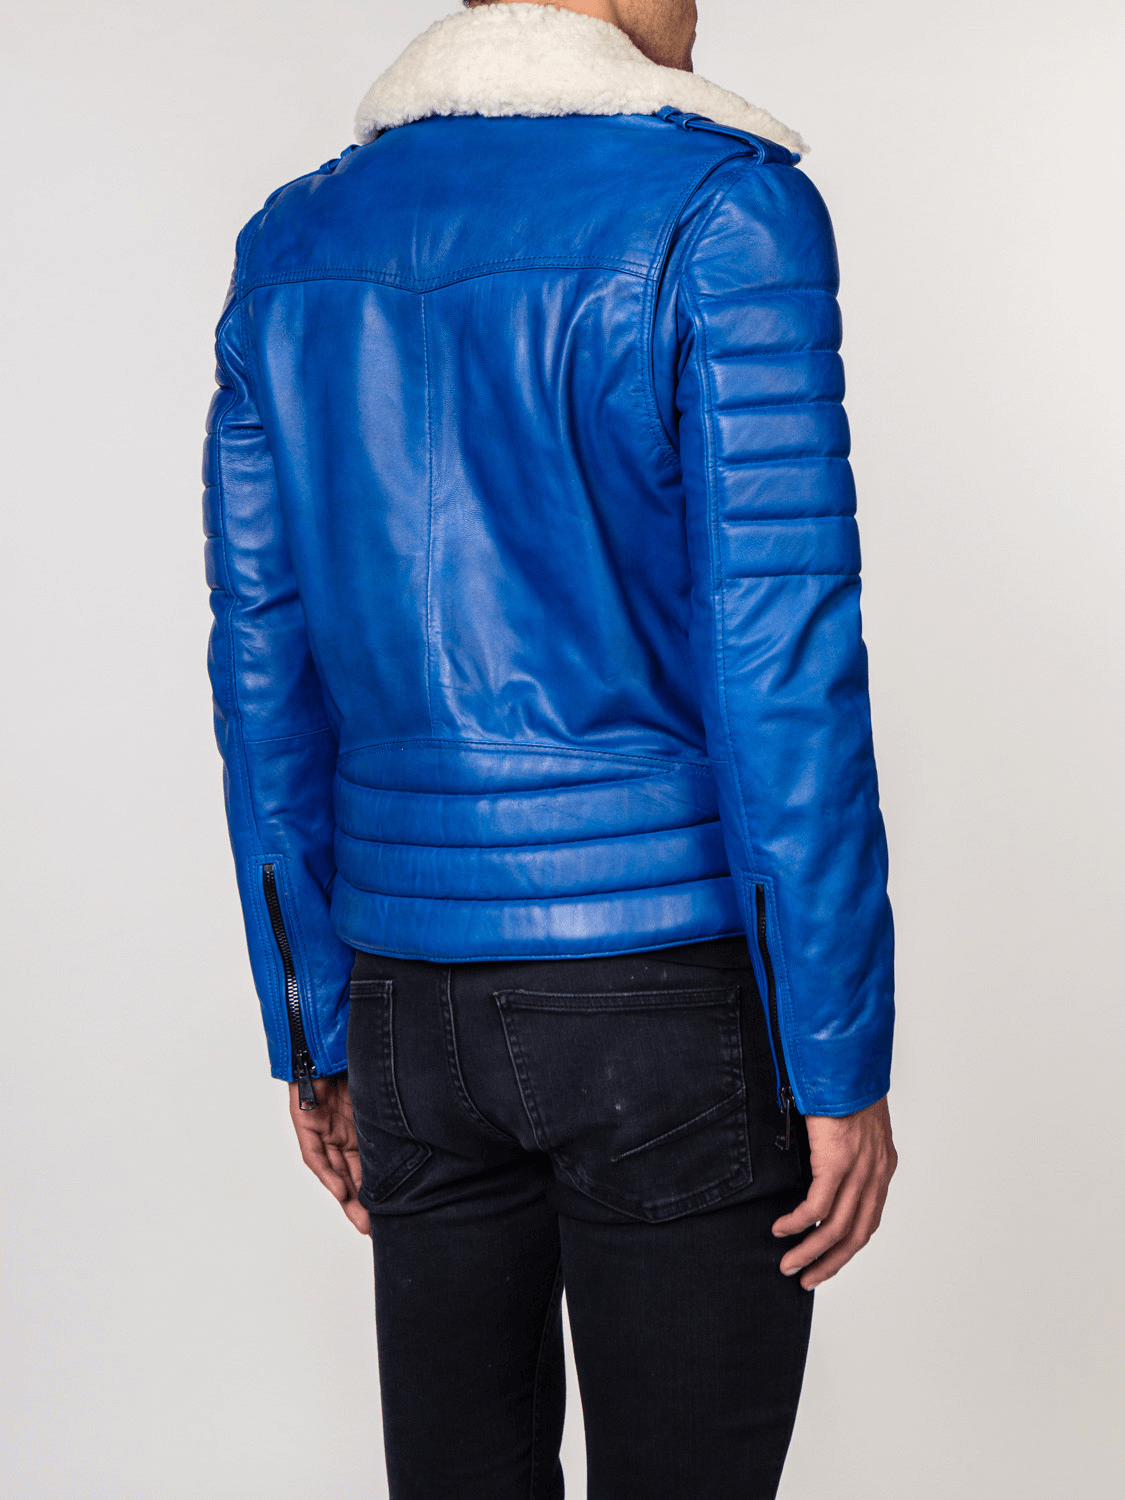 Jose Blue Fur Collared Leather Jacket